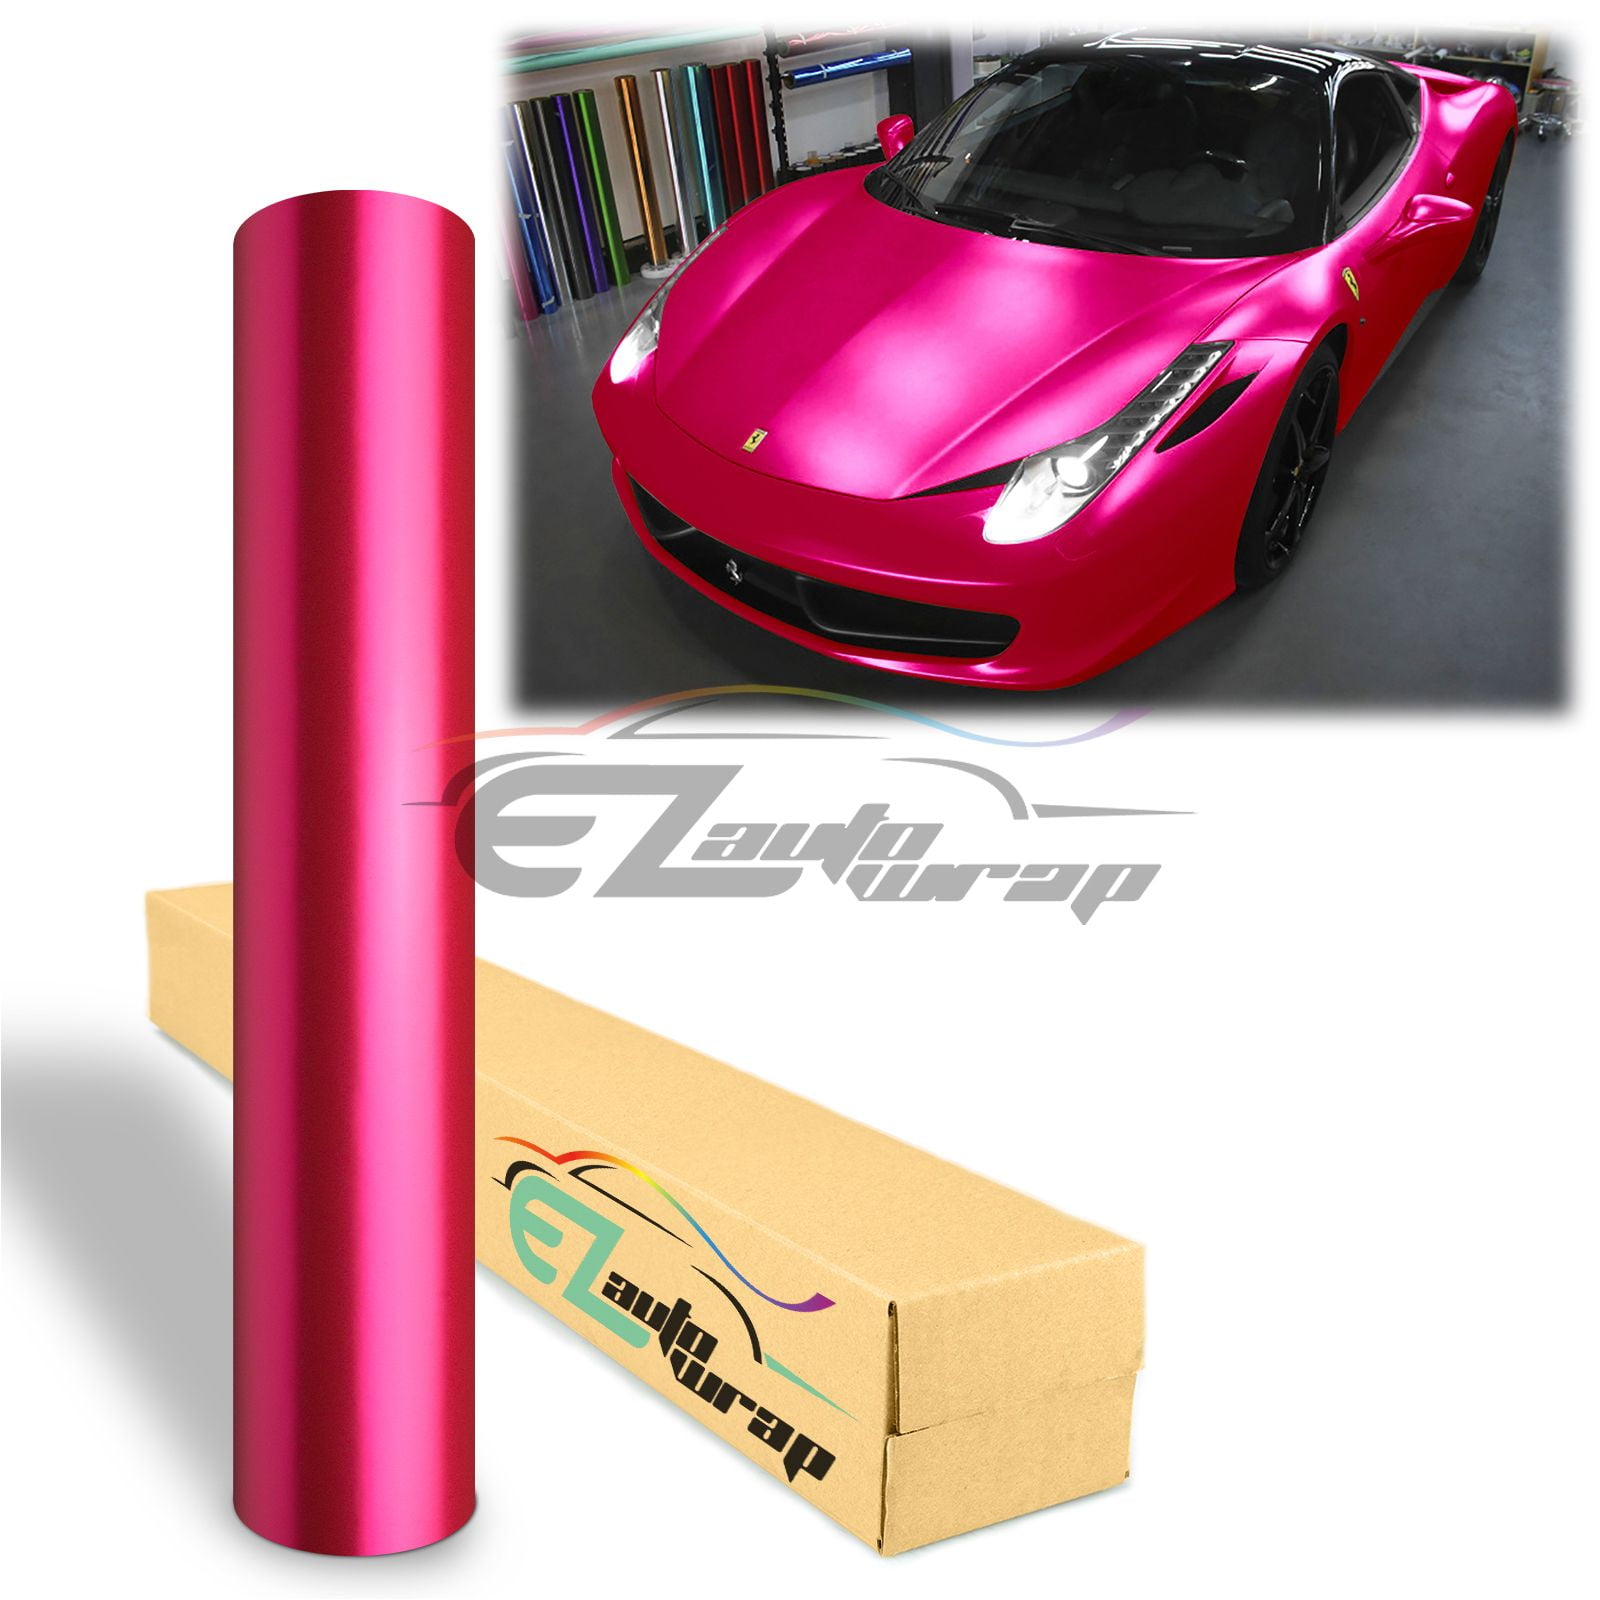 EZAUTOWRAP Anodized Chrome Pink Car Vinyl Wrap Sticker Decal Matte Metallic  Bubble Free Air Release Technology 